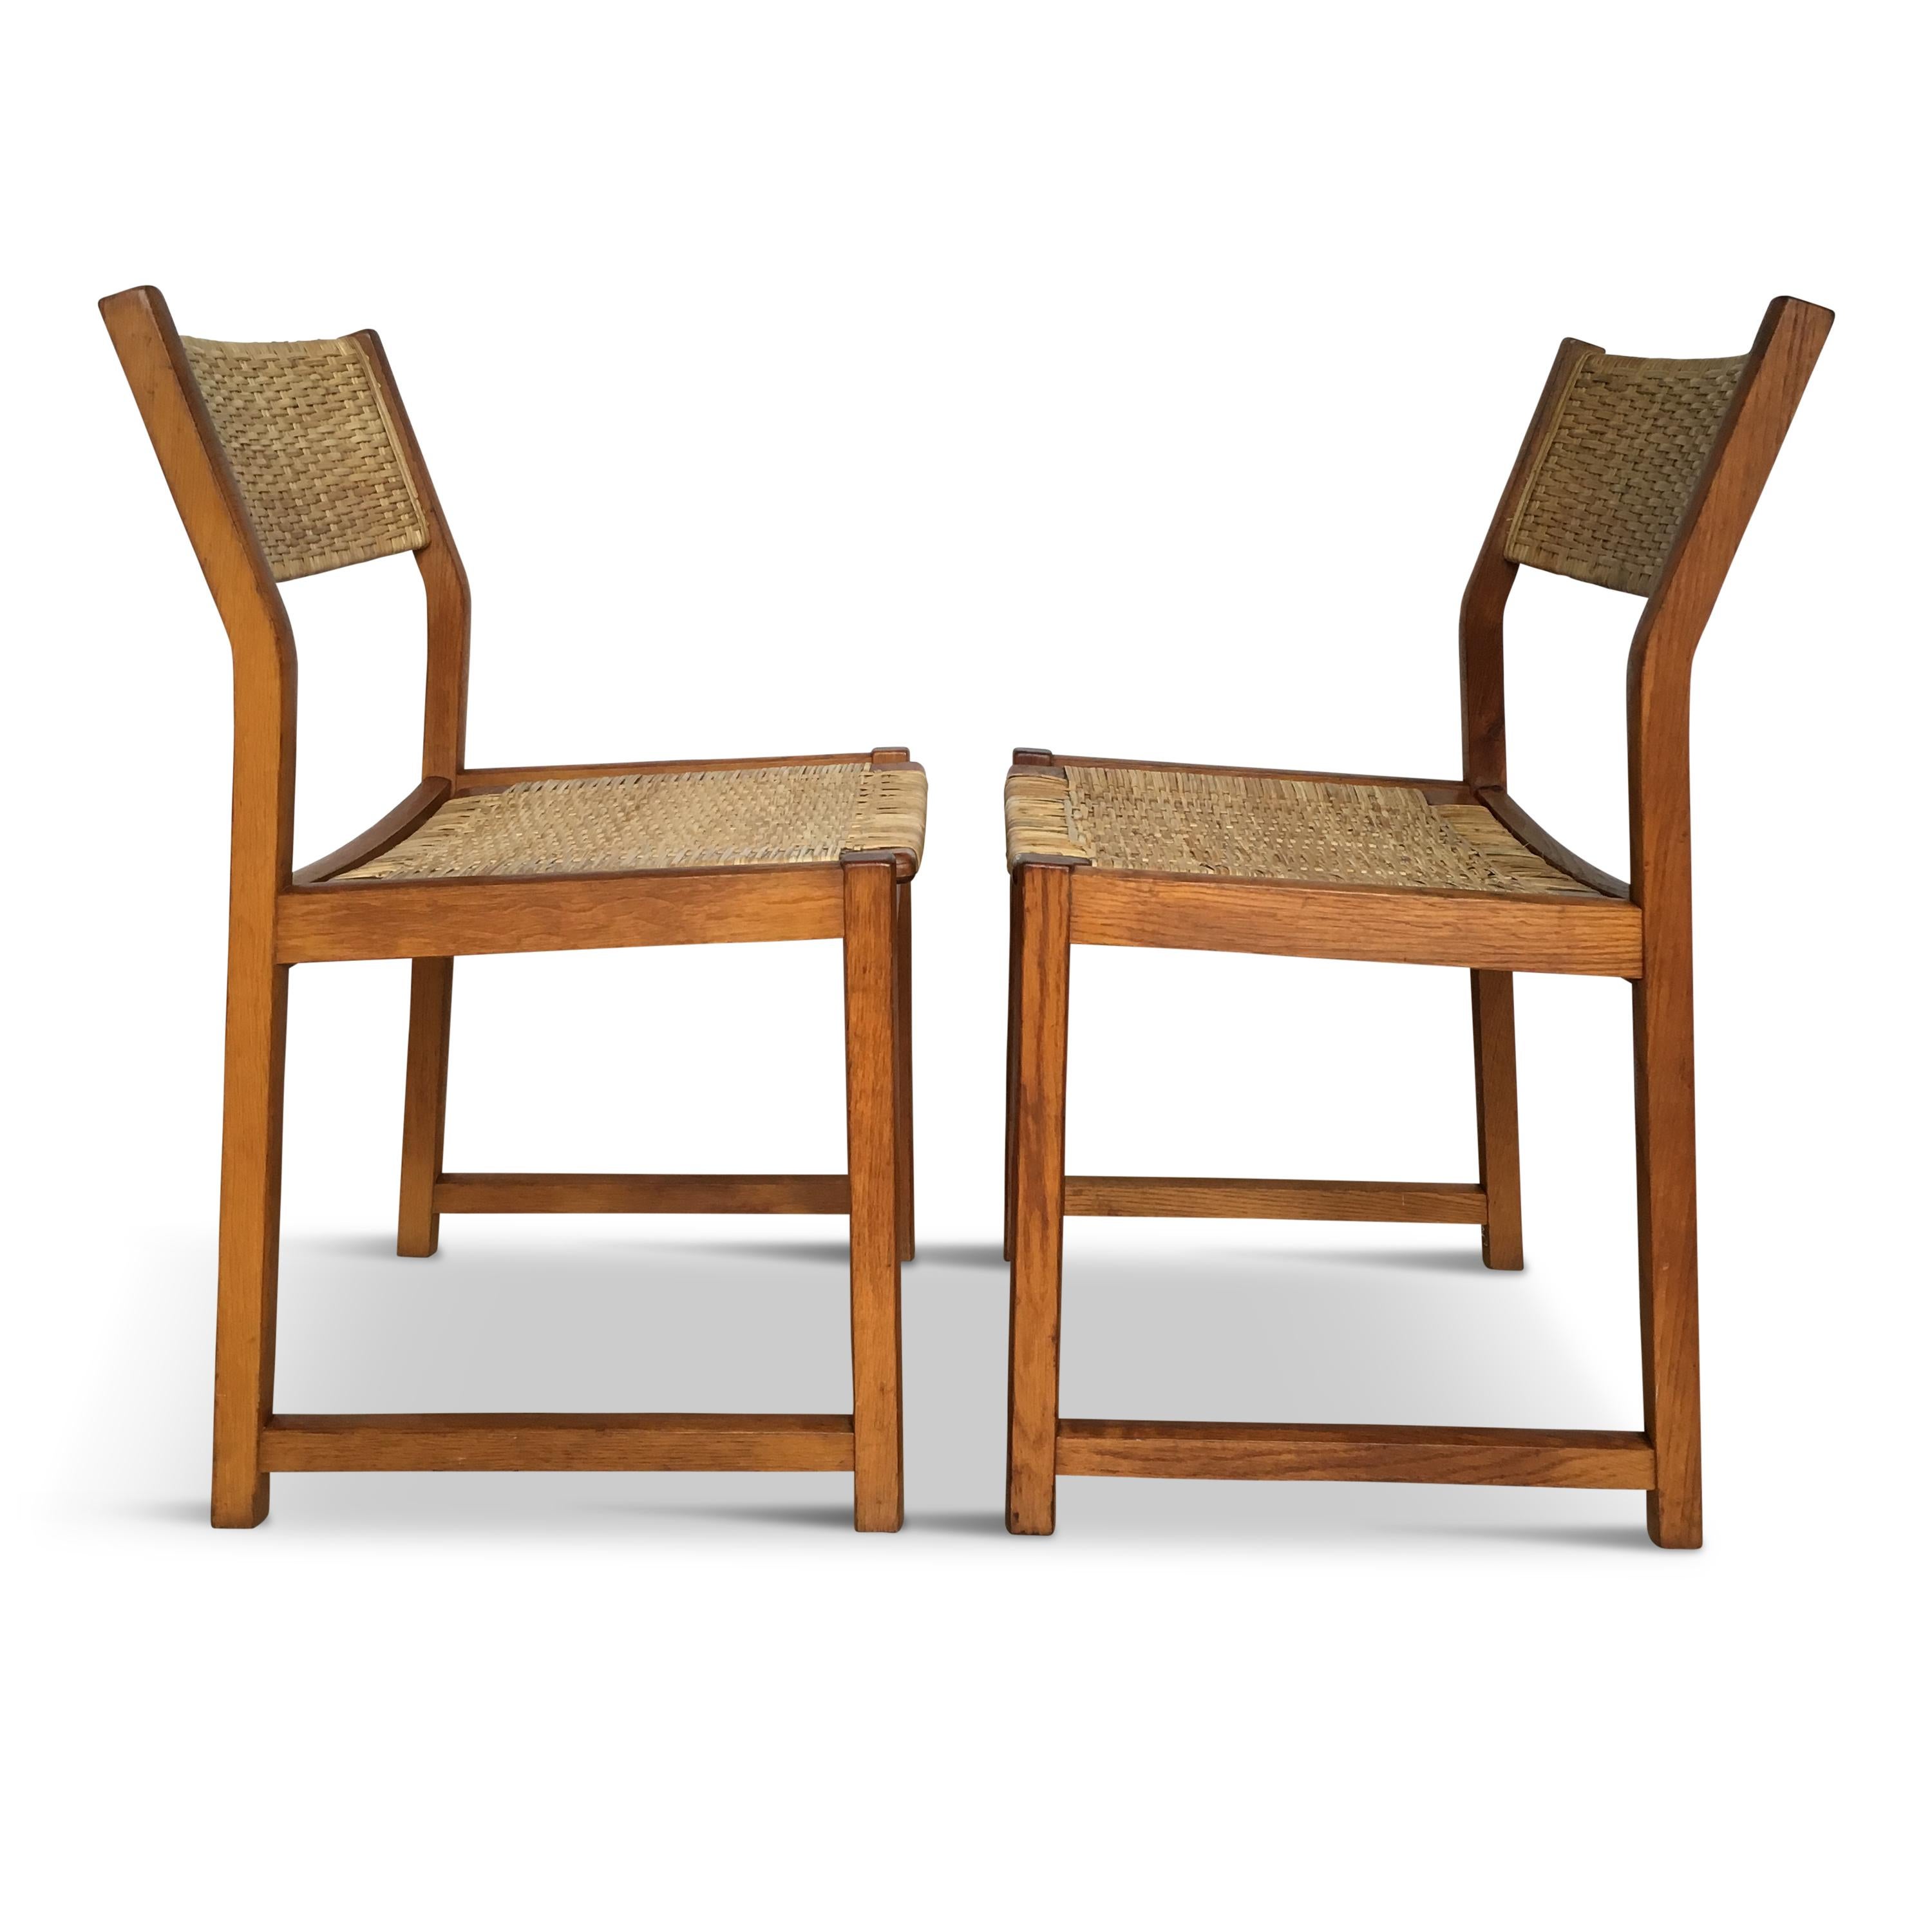 Mid-20th Century Danish Chairs by Peter Hvidt & Orla Mølgaard Nielsen for Søborg Møbelfabrik For Sale